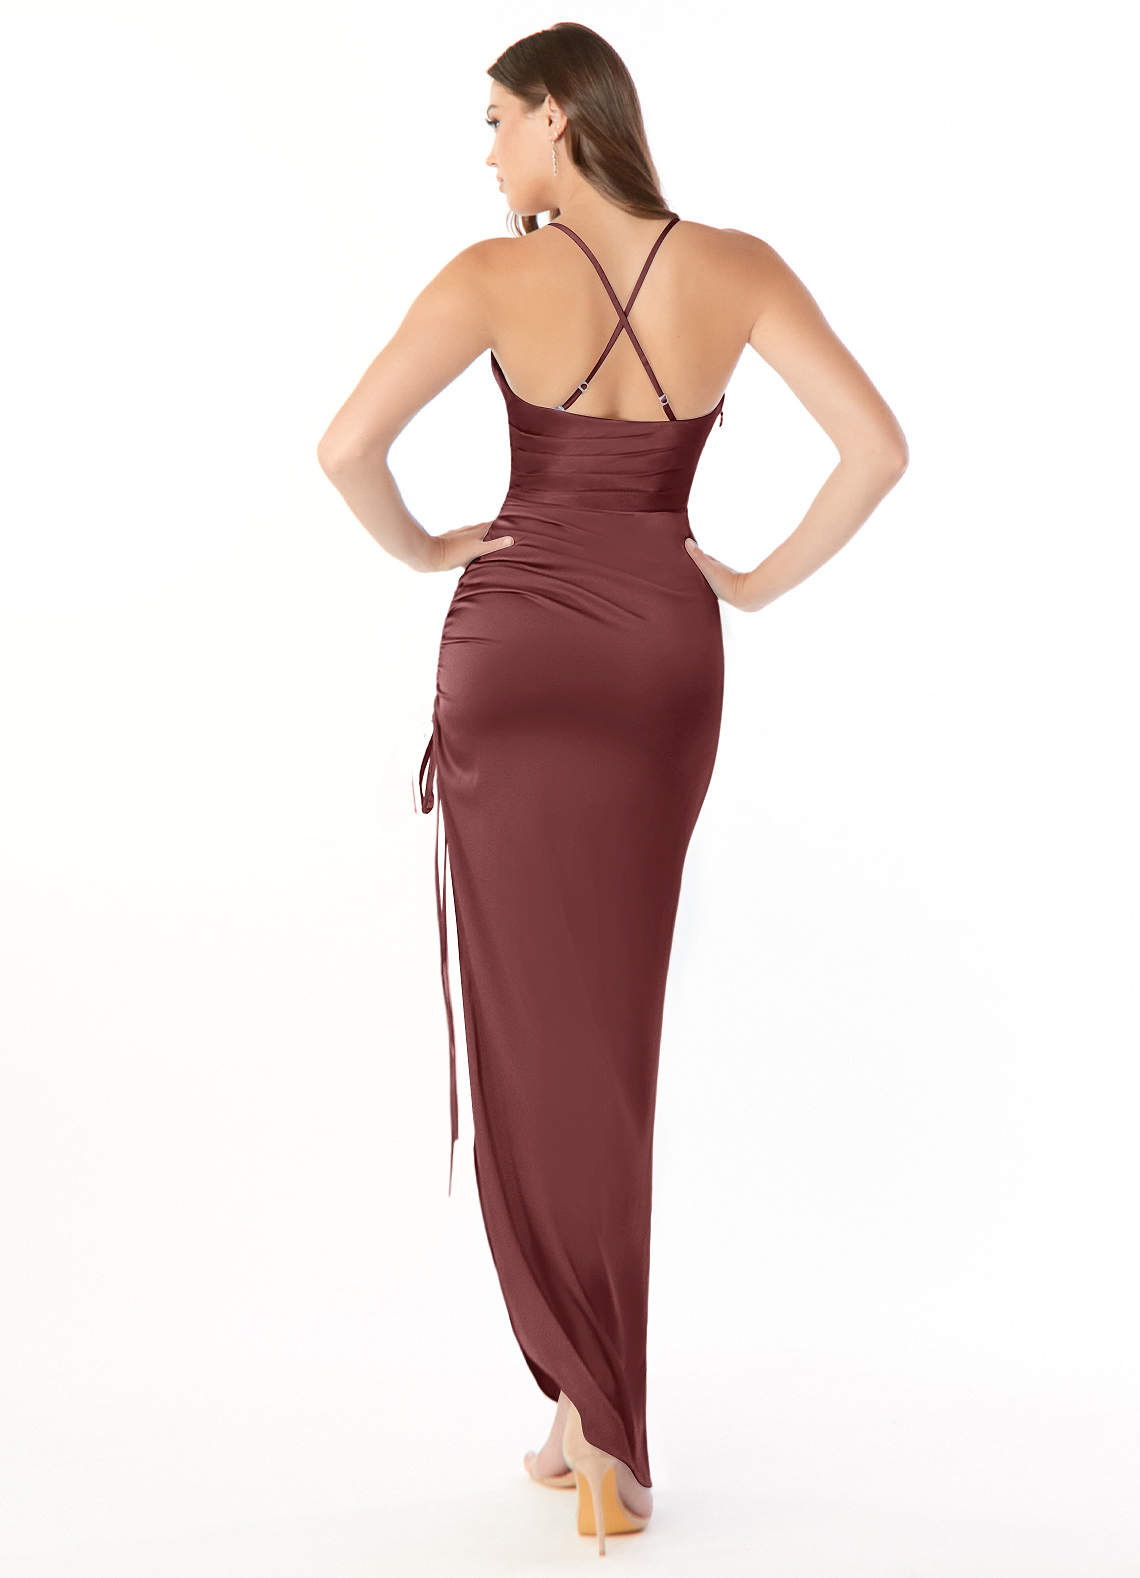 Azazie Reese Bridesmaid Dresses Sheath Pleated Stretch Satin Floor-Length Dress image1